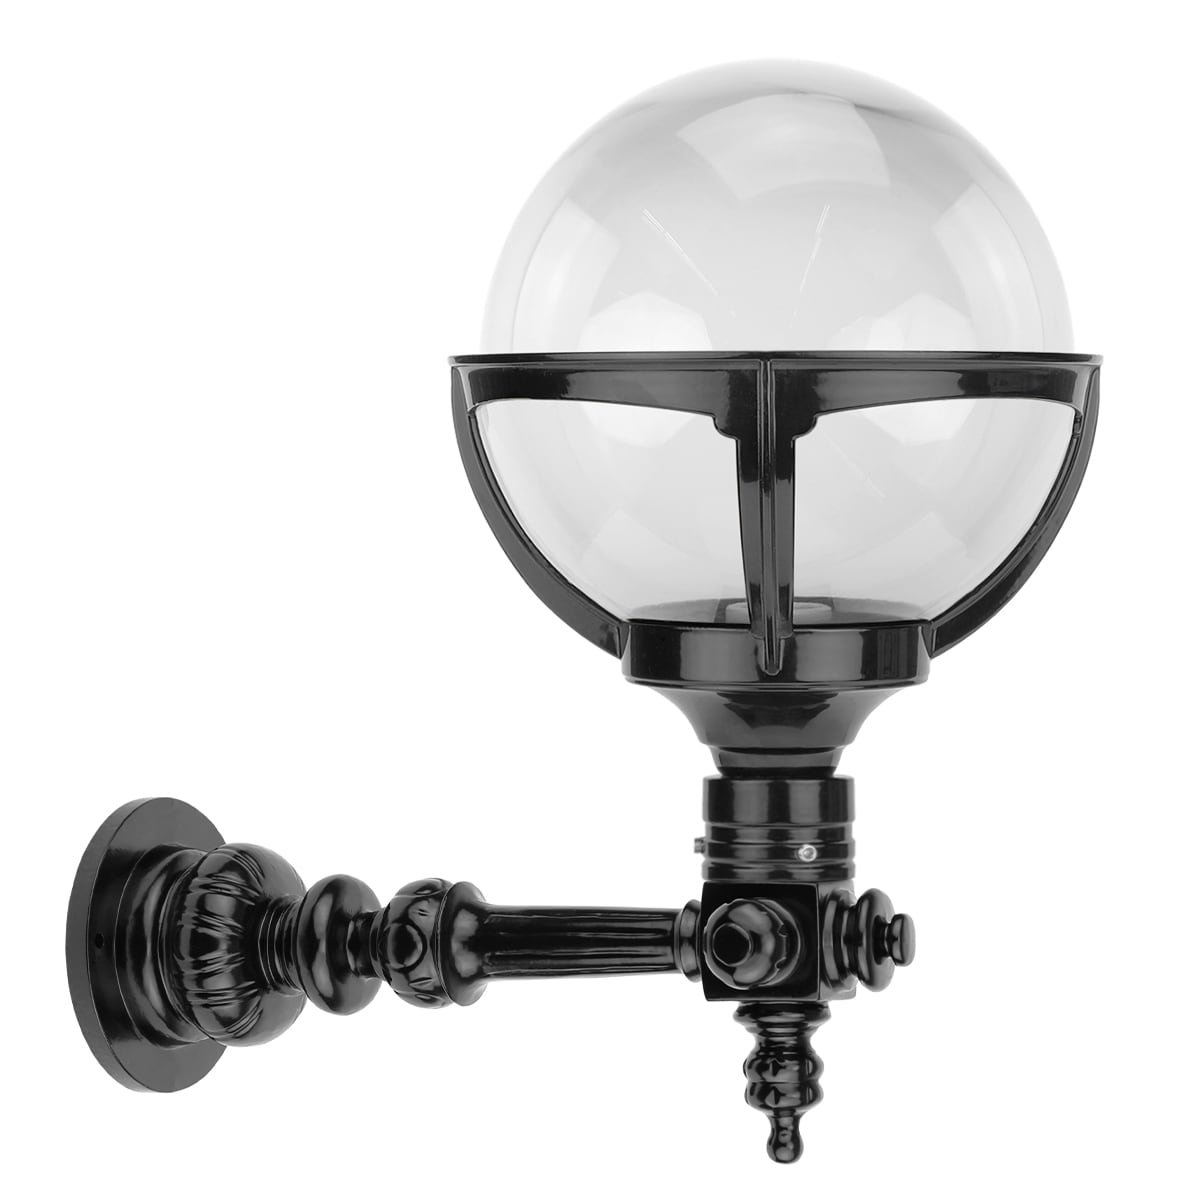 Sphere lamp on rod clear glass Erichem - 40 cm